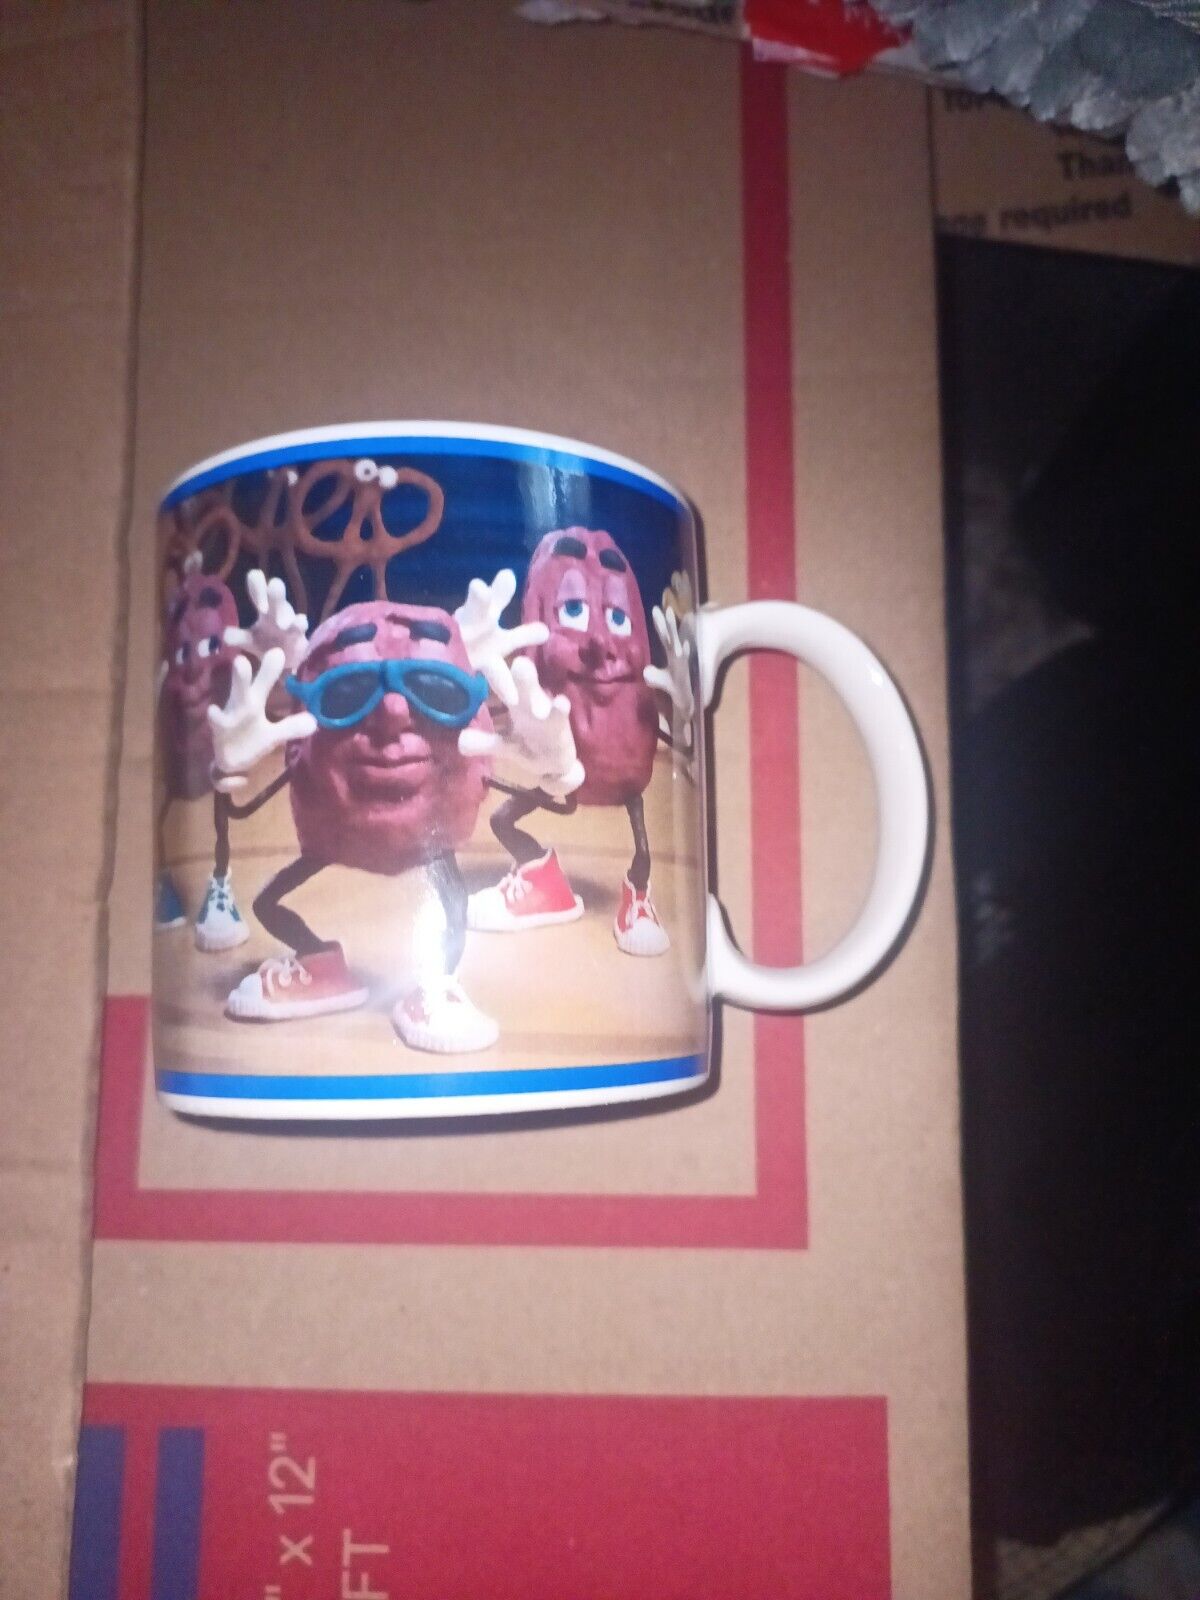 VTG Applause 1987 The California Raisins Mug Cup You Make Me Feel Like Dancin